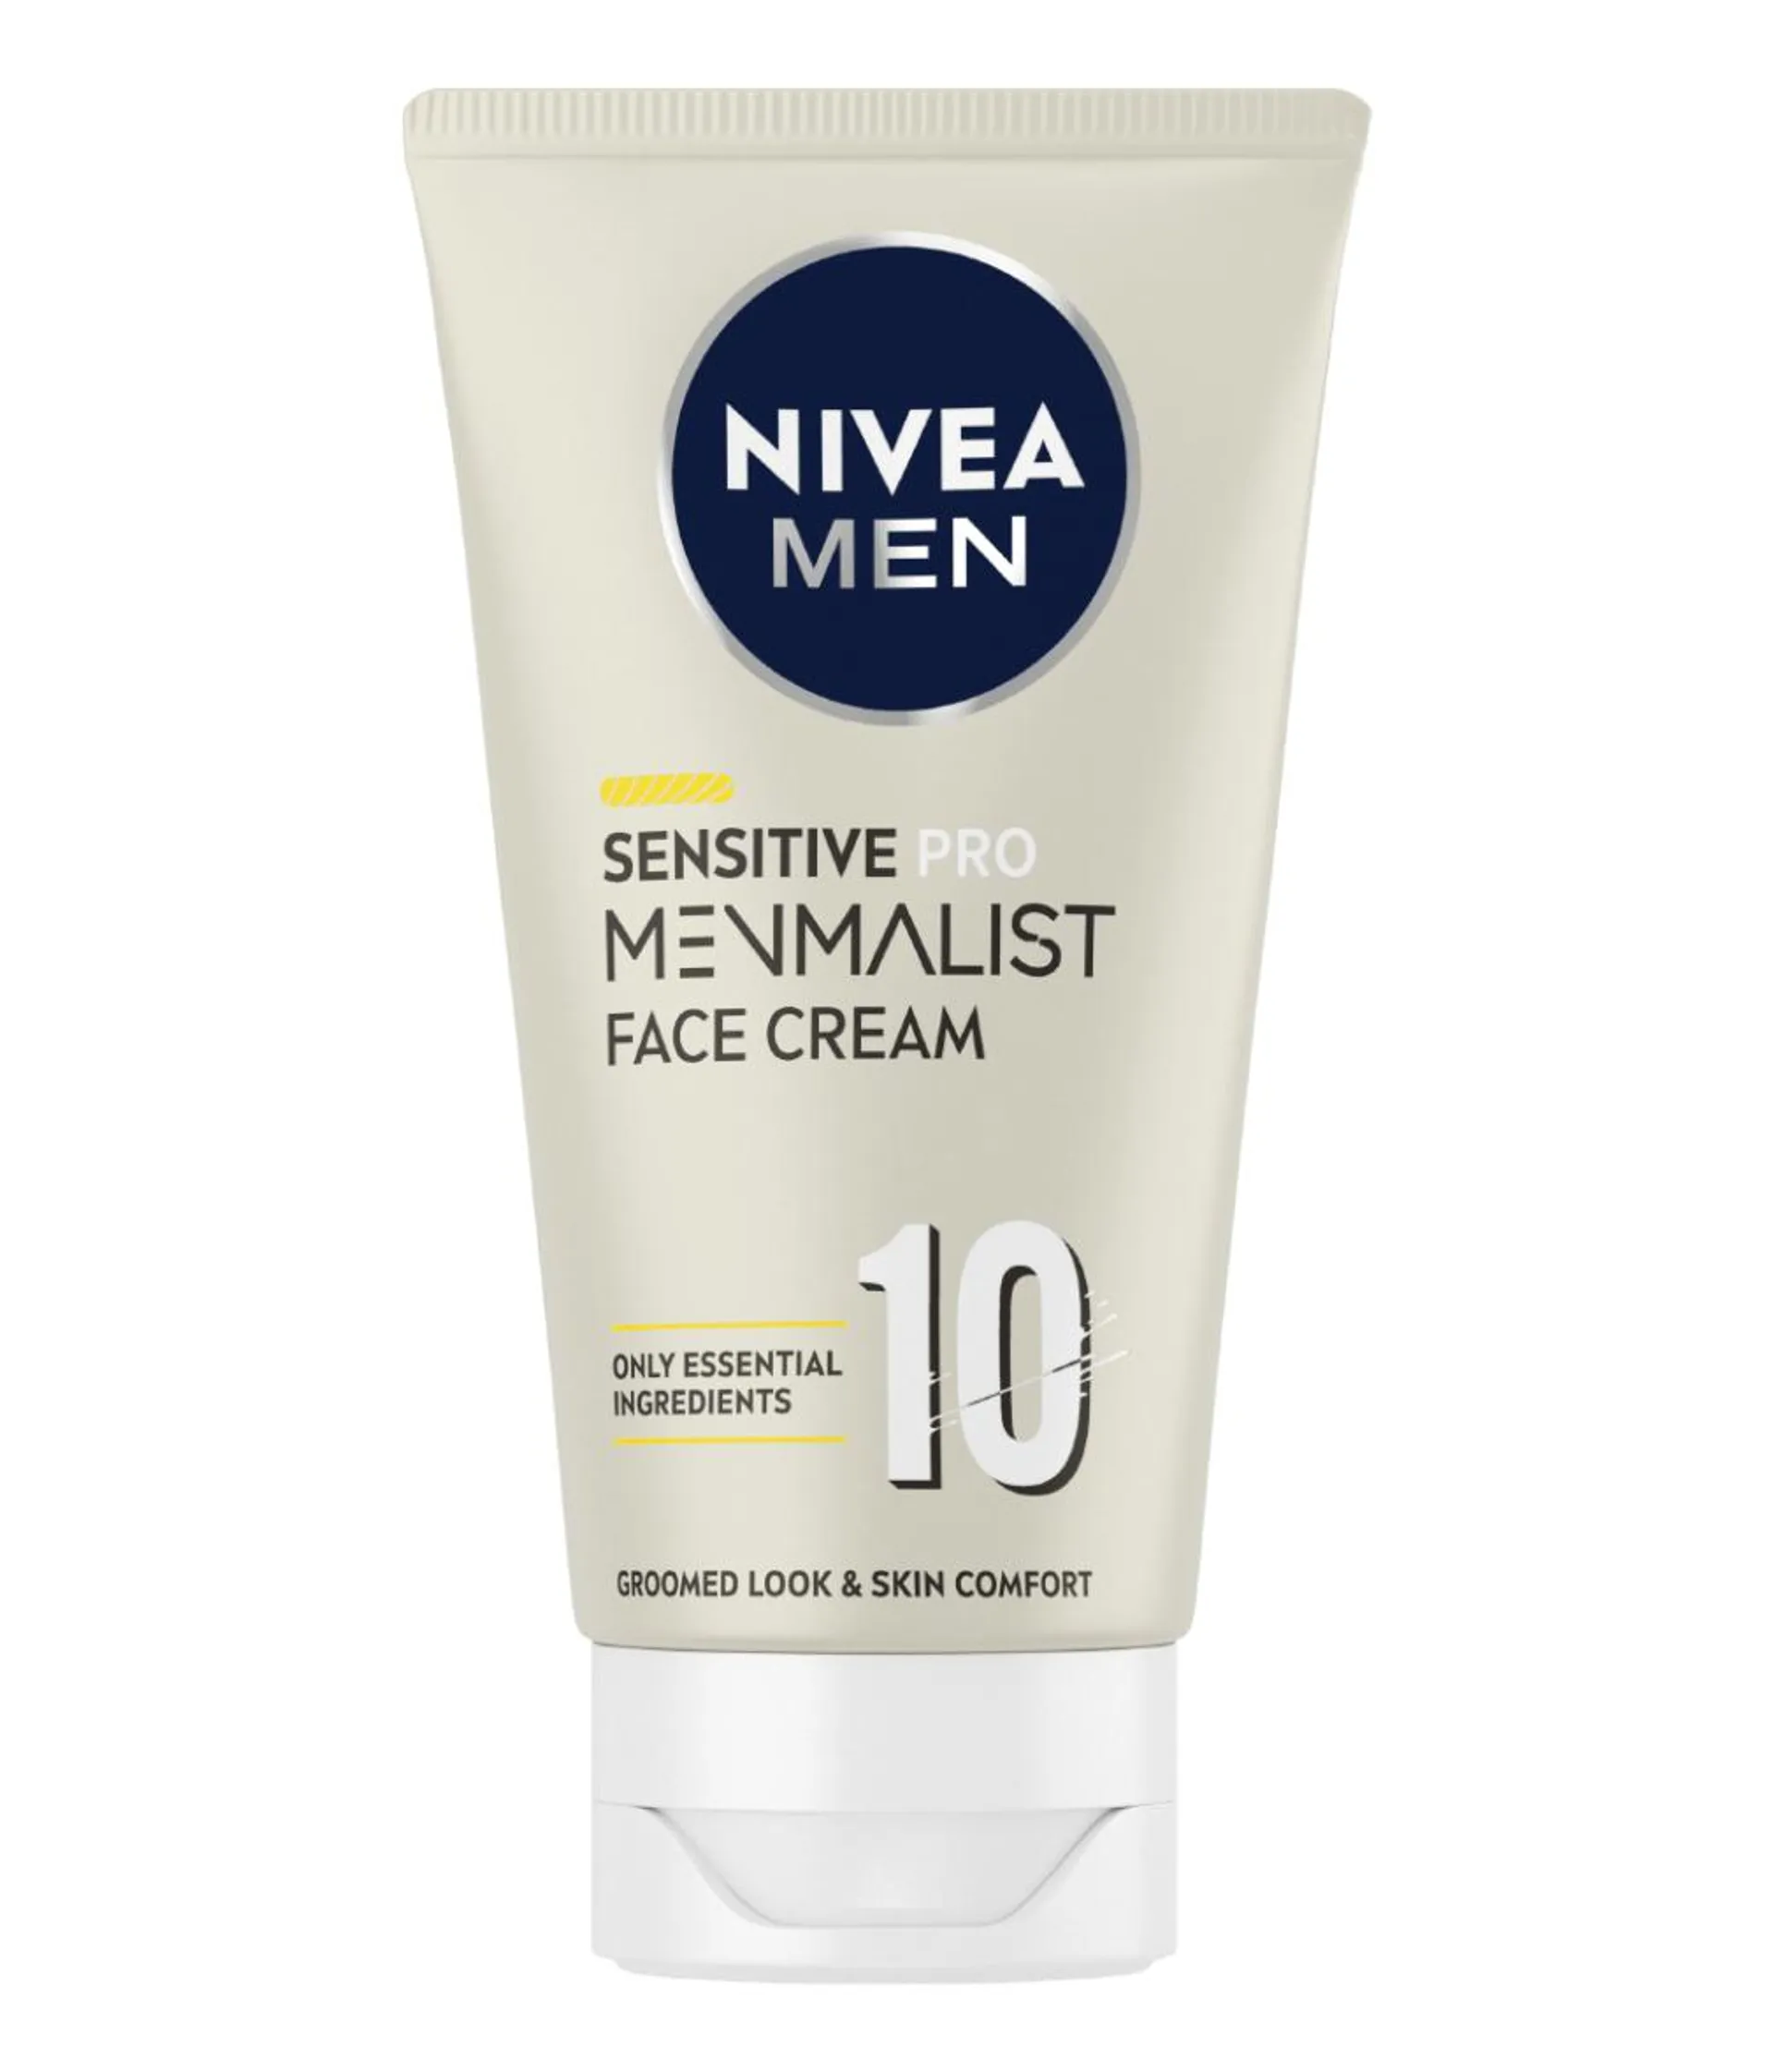 NIVEA MEN Sensitive Pro Menmalist Face Cream